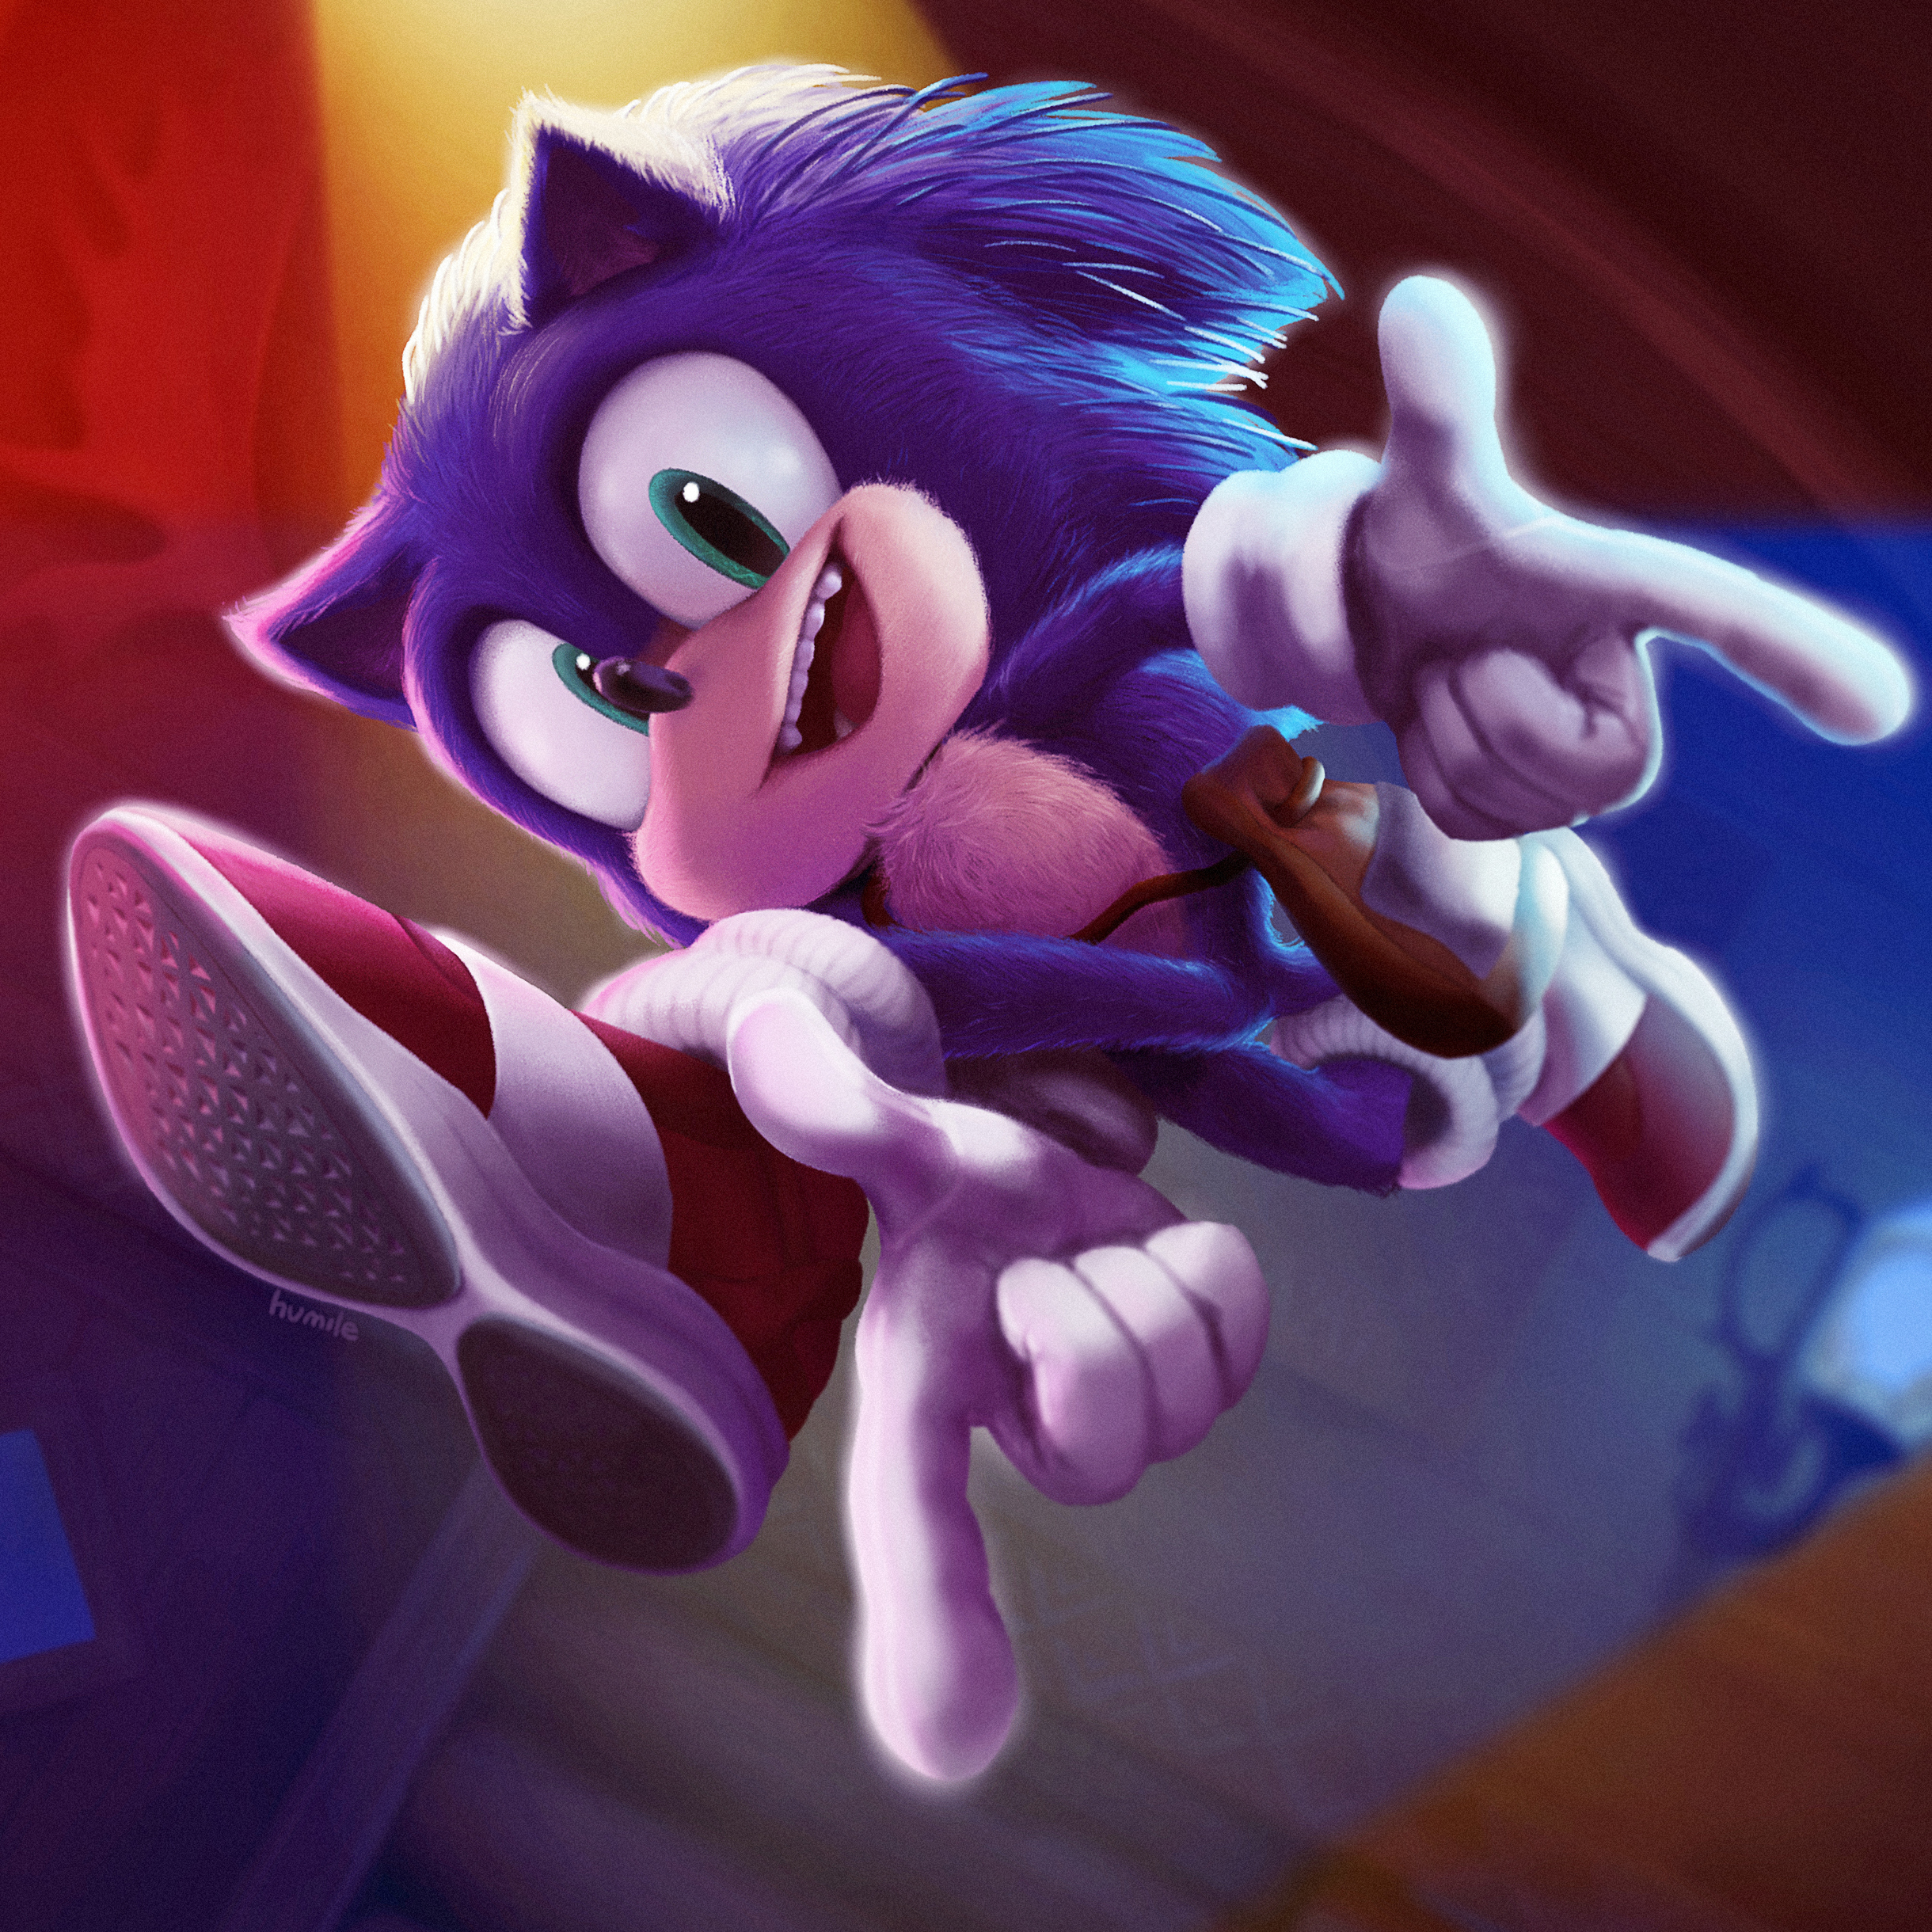 Shadow the Hedgehog movie Sonic adveture 2 pose by DanielVieiraBr2020 on  DeviantArt